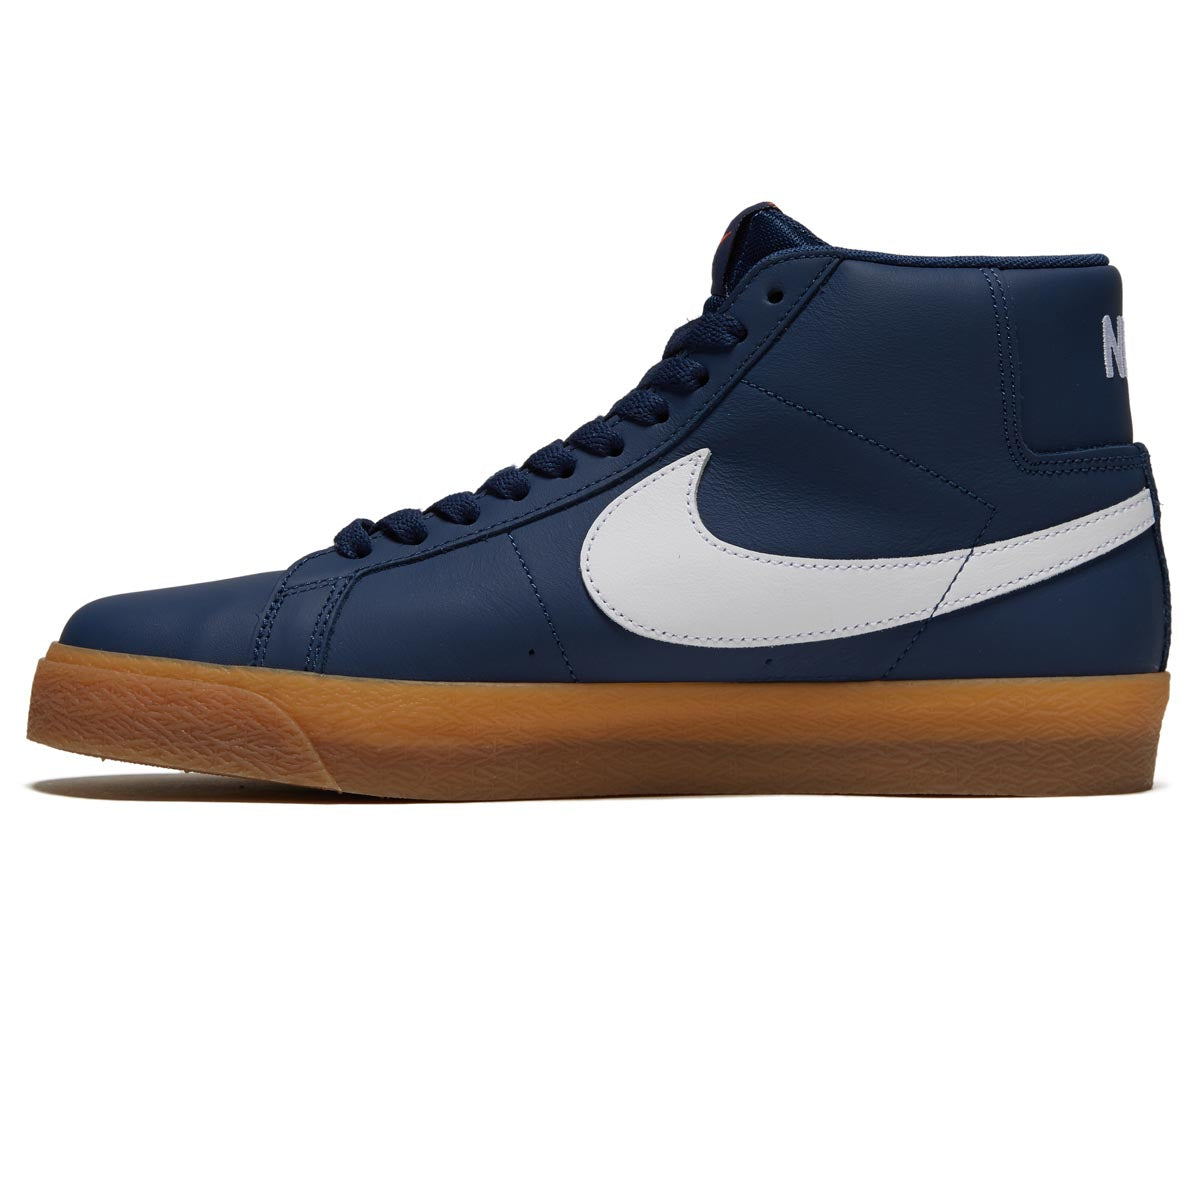 Nike SB Zoom Blazer Mid Shoes - Navy/White/Navy/Gum Light Brown image 2